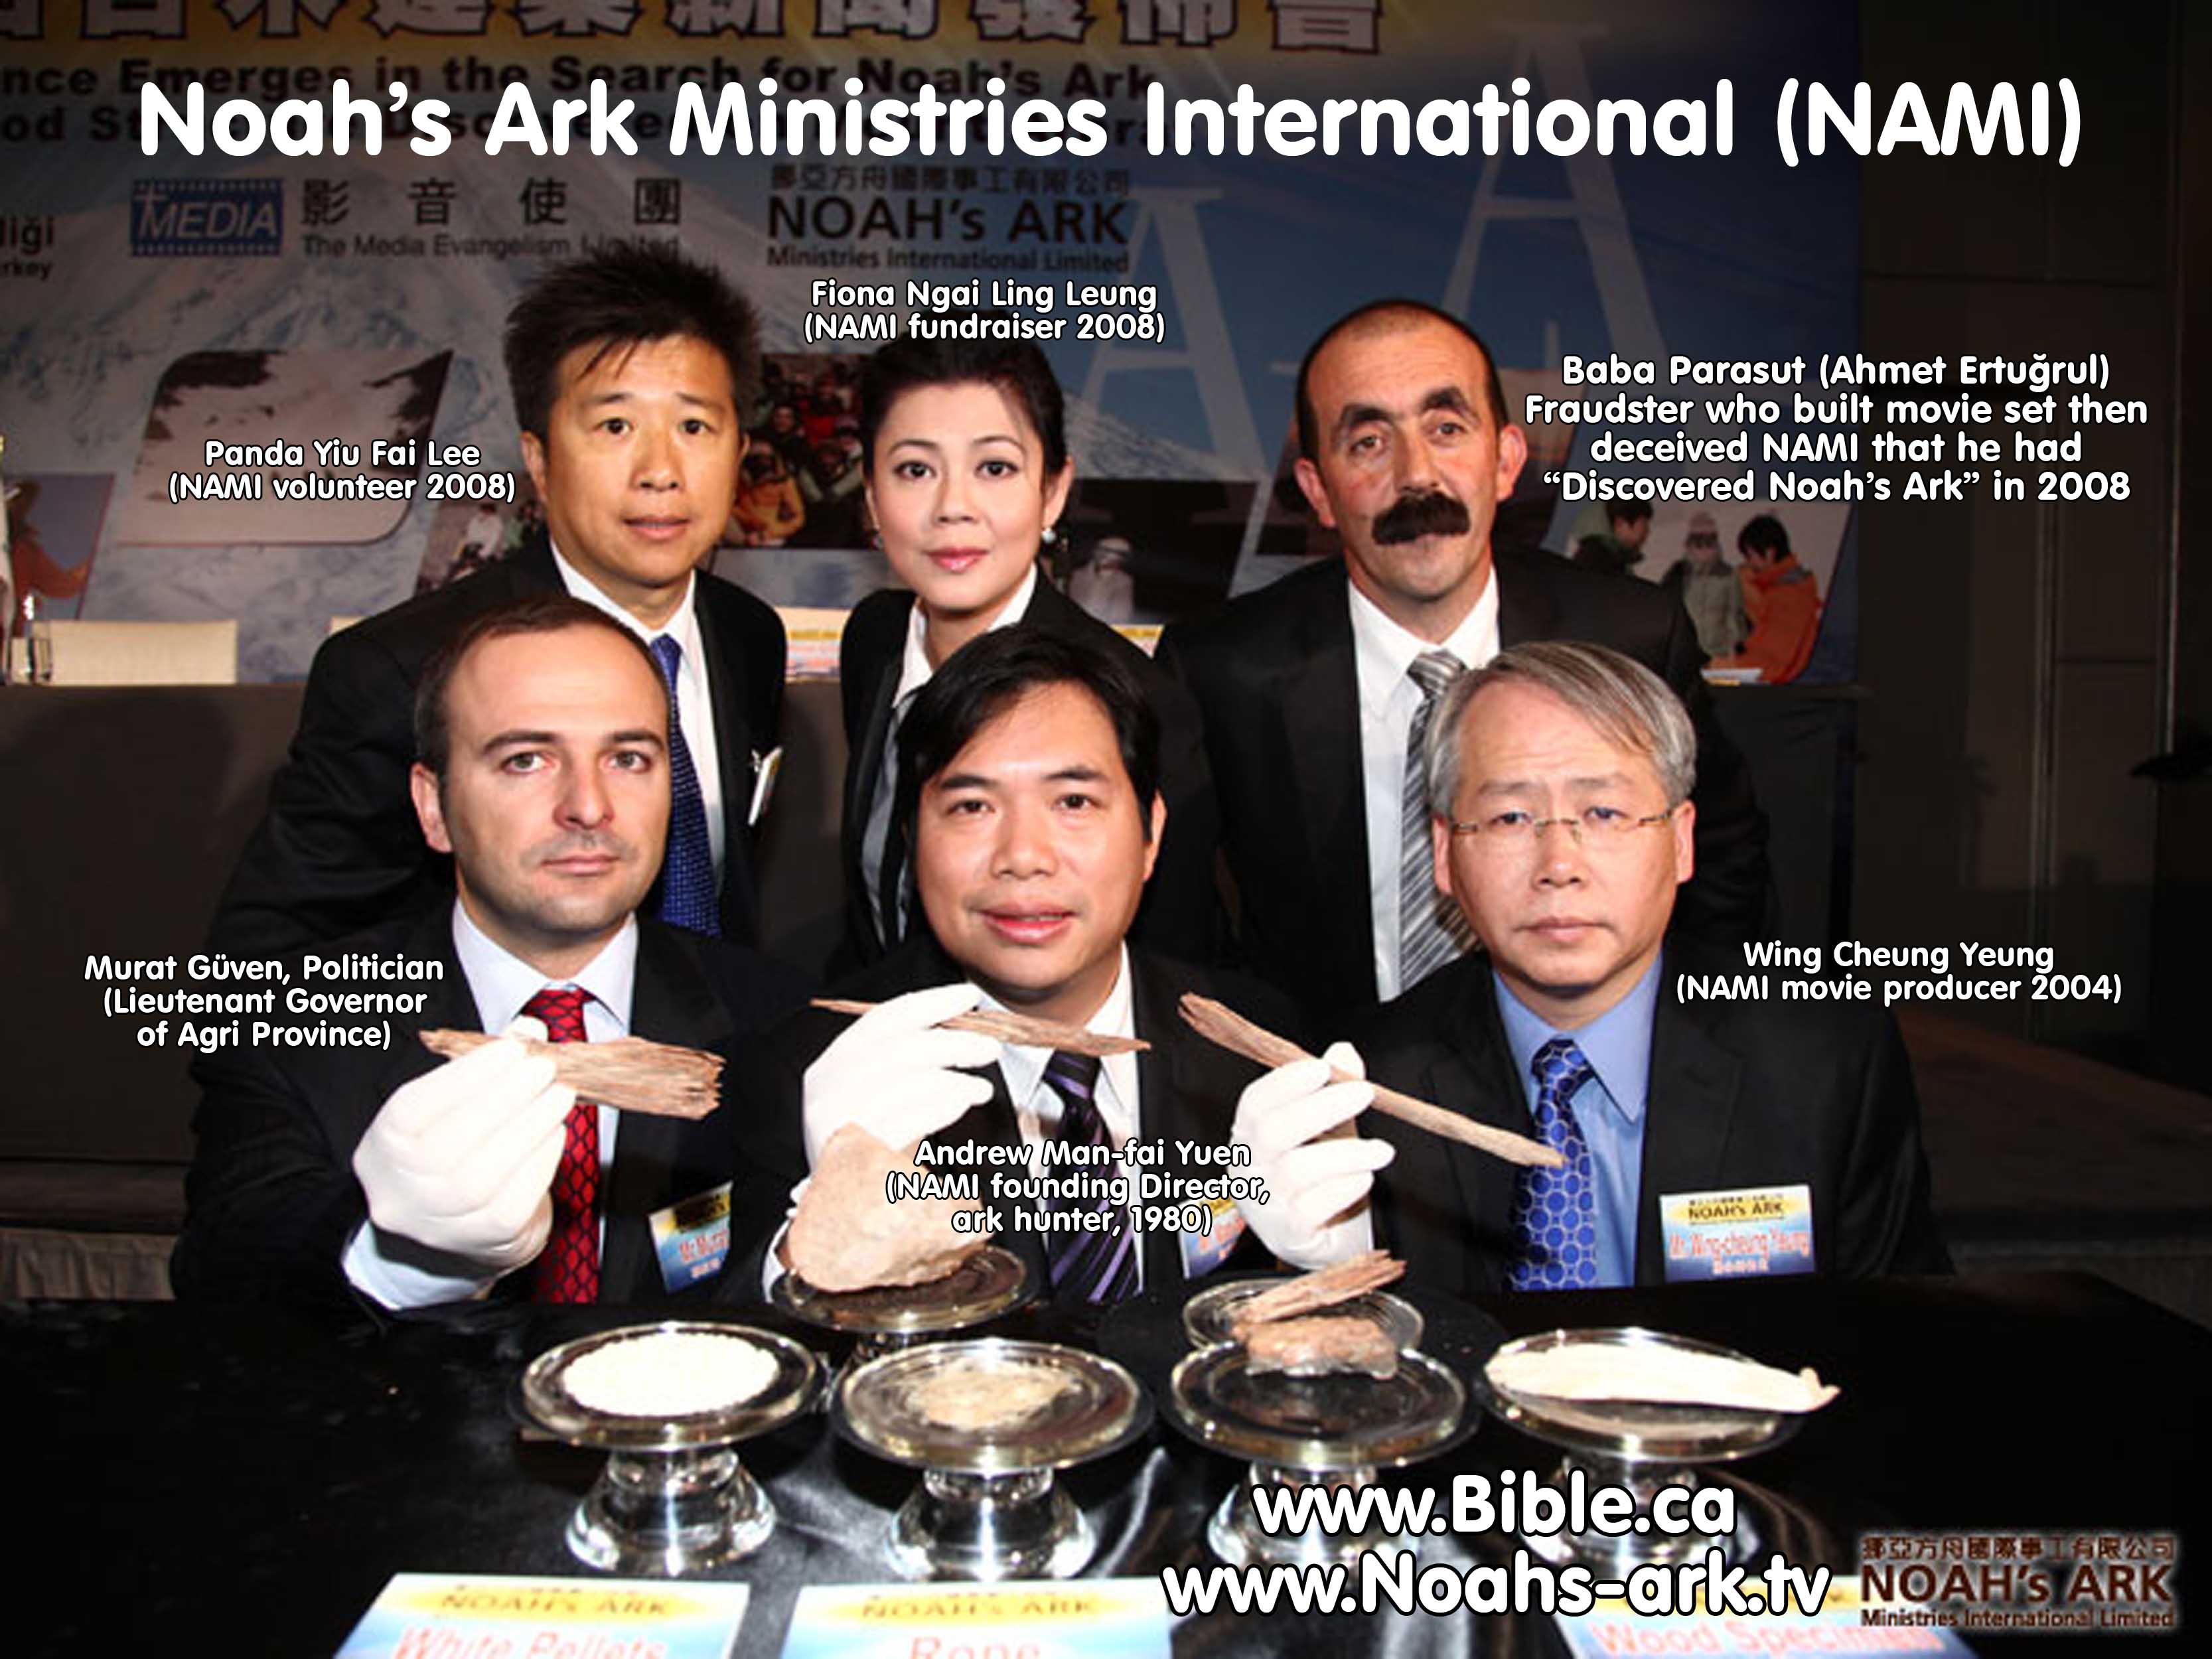 Description: NAMI-noahs-ark-discovered-found-made-in-china-fraud\NAMI-noahs-ark-fraud-baba-parasut-chinese-team.jpg